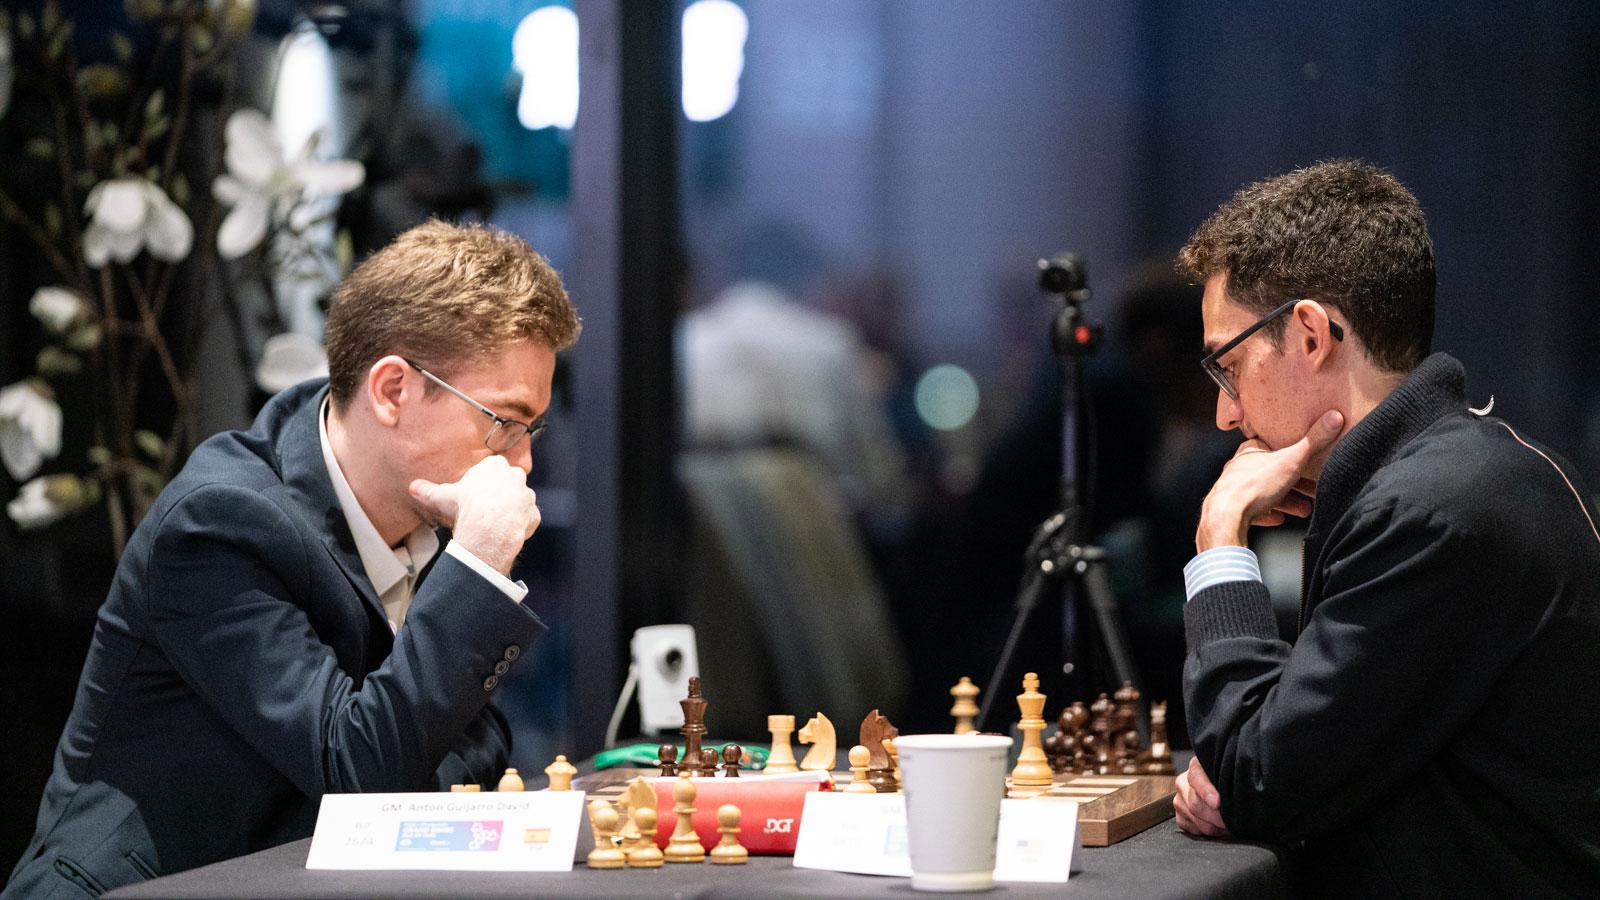 Grand Swiss 10: Caruana and Wang Hao lead